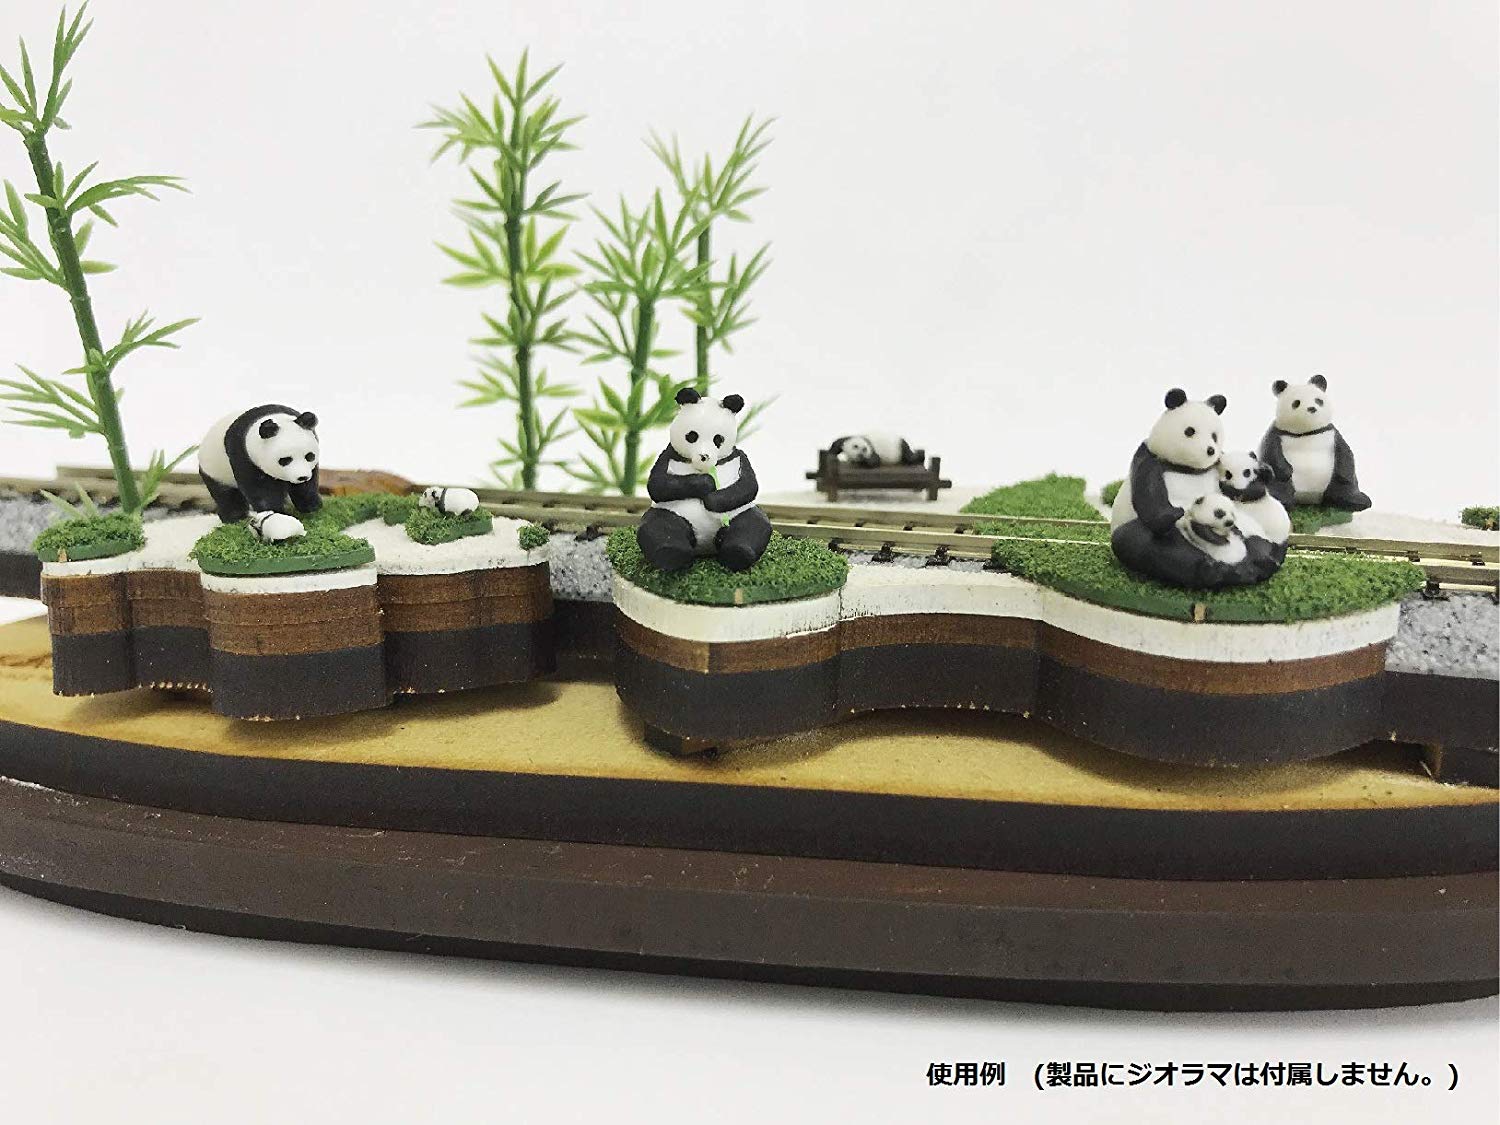 Figuanimal 1/87 Panda Family (7 Pieces)